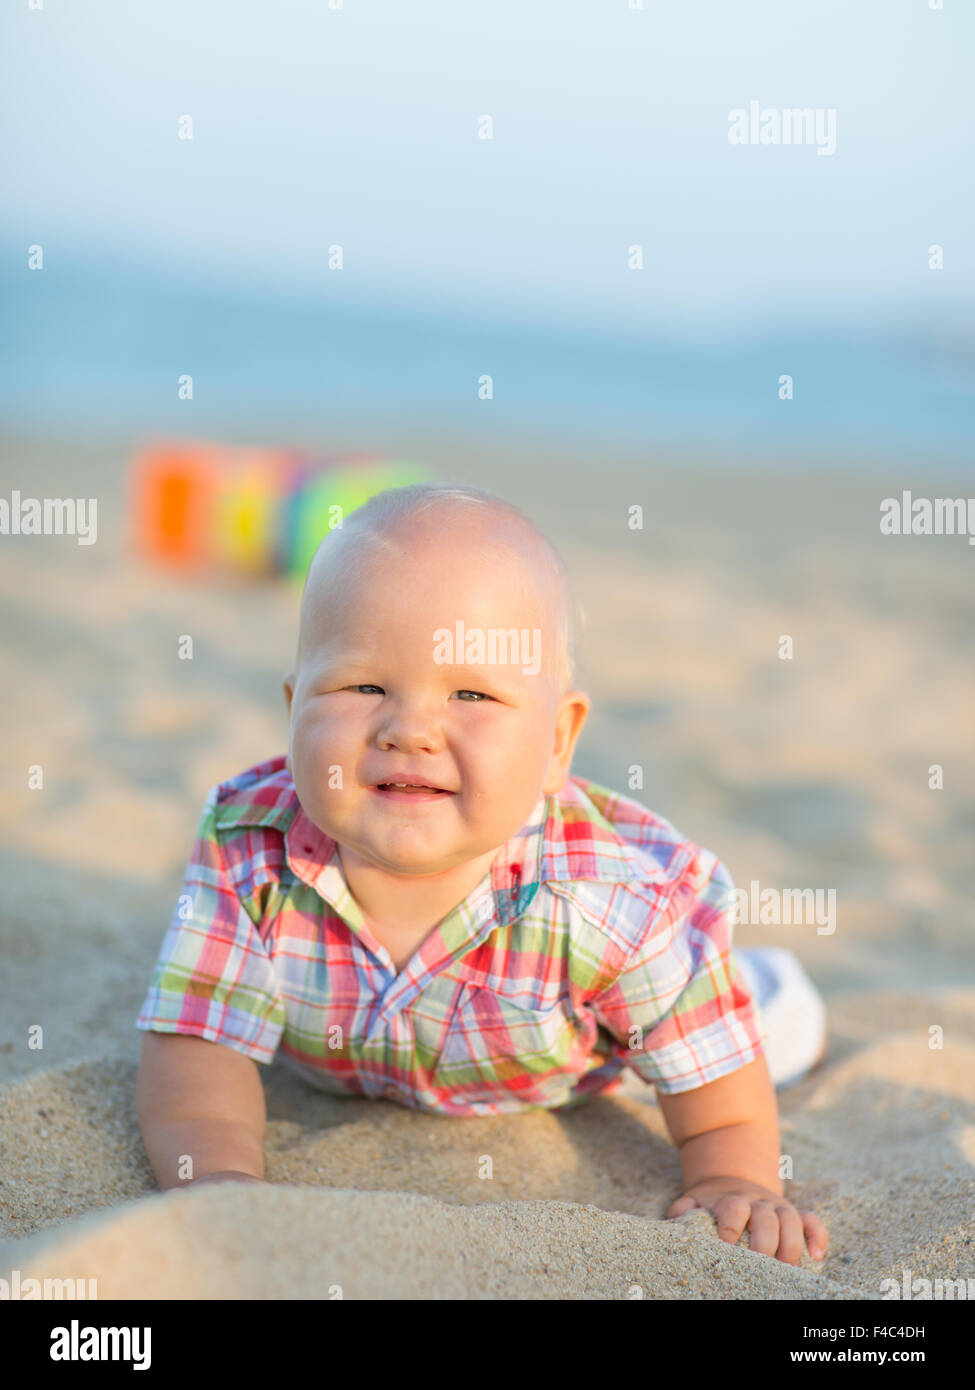 Baby on the beach Stock Photo - Alamy